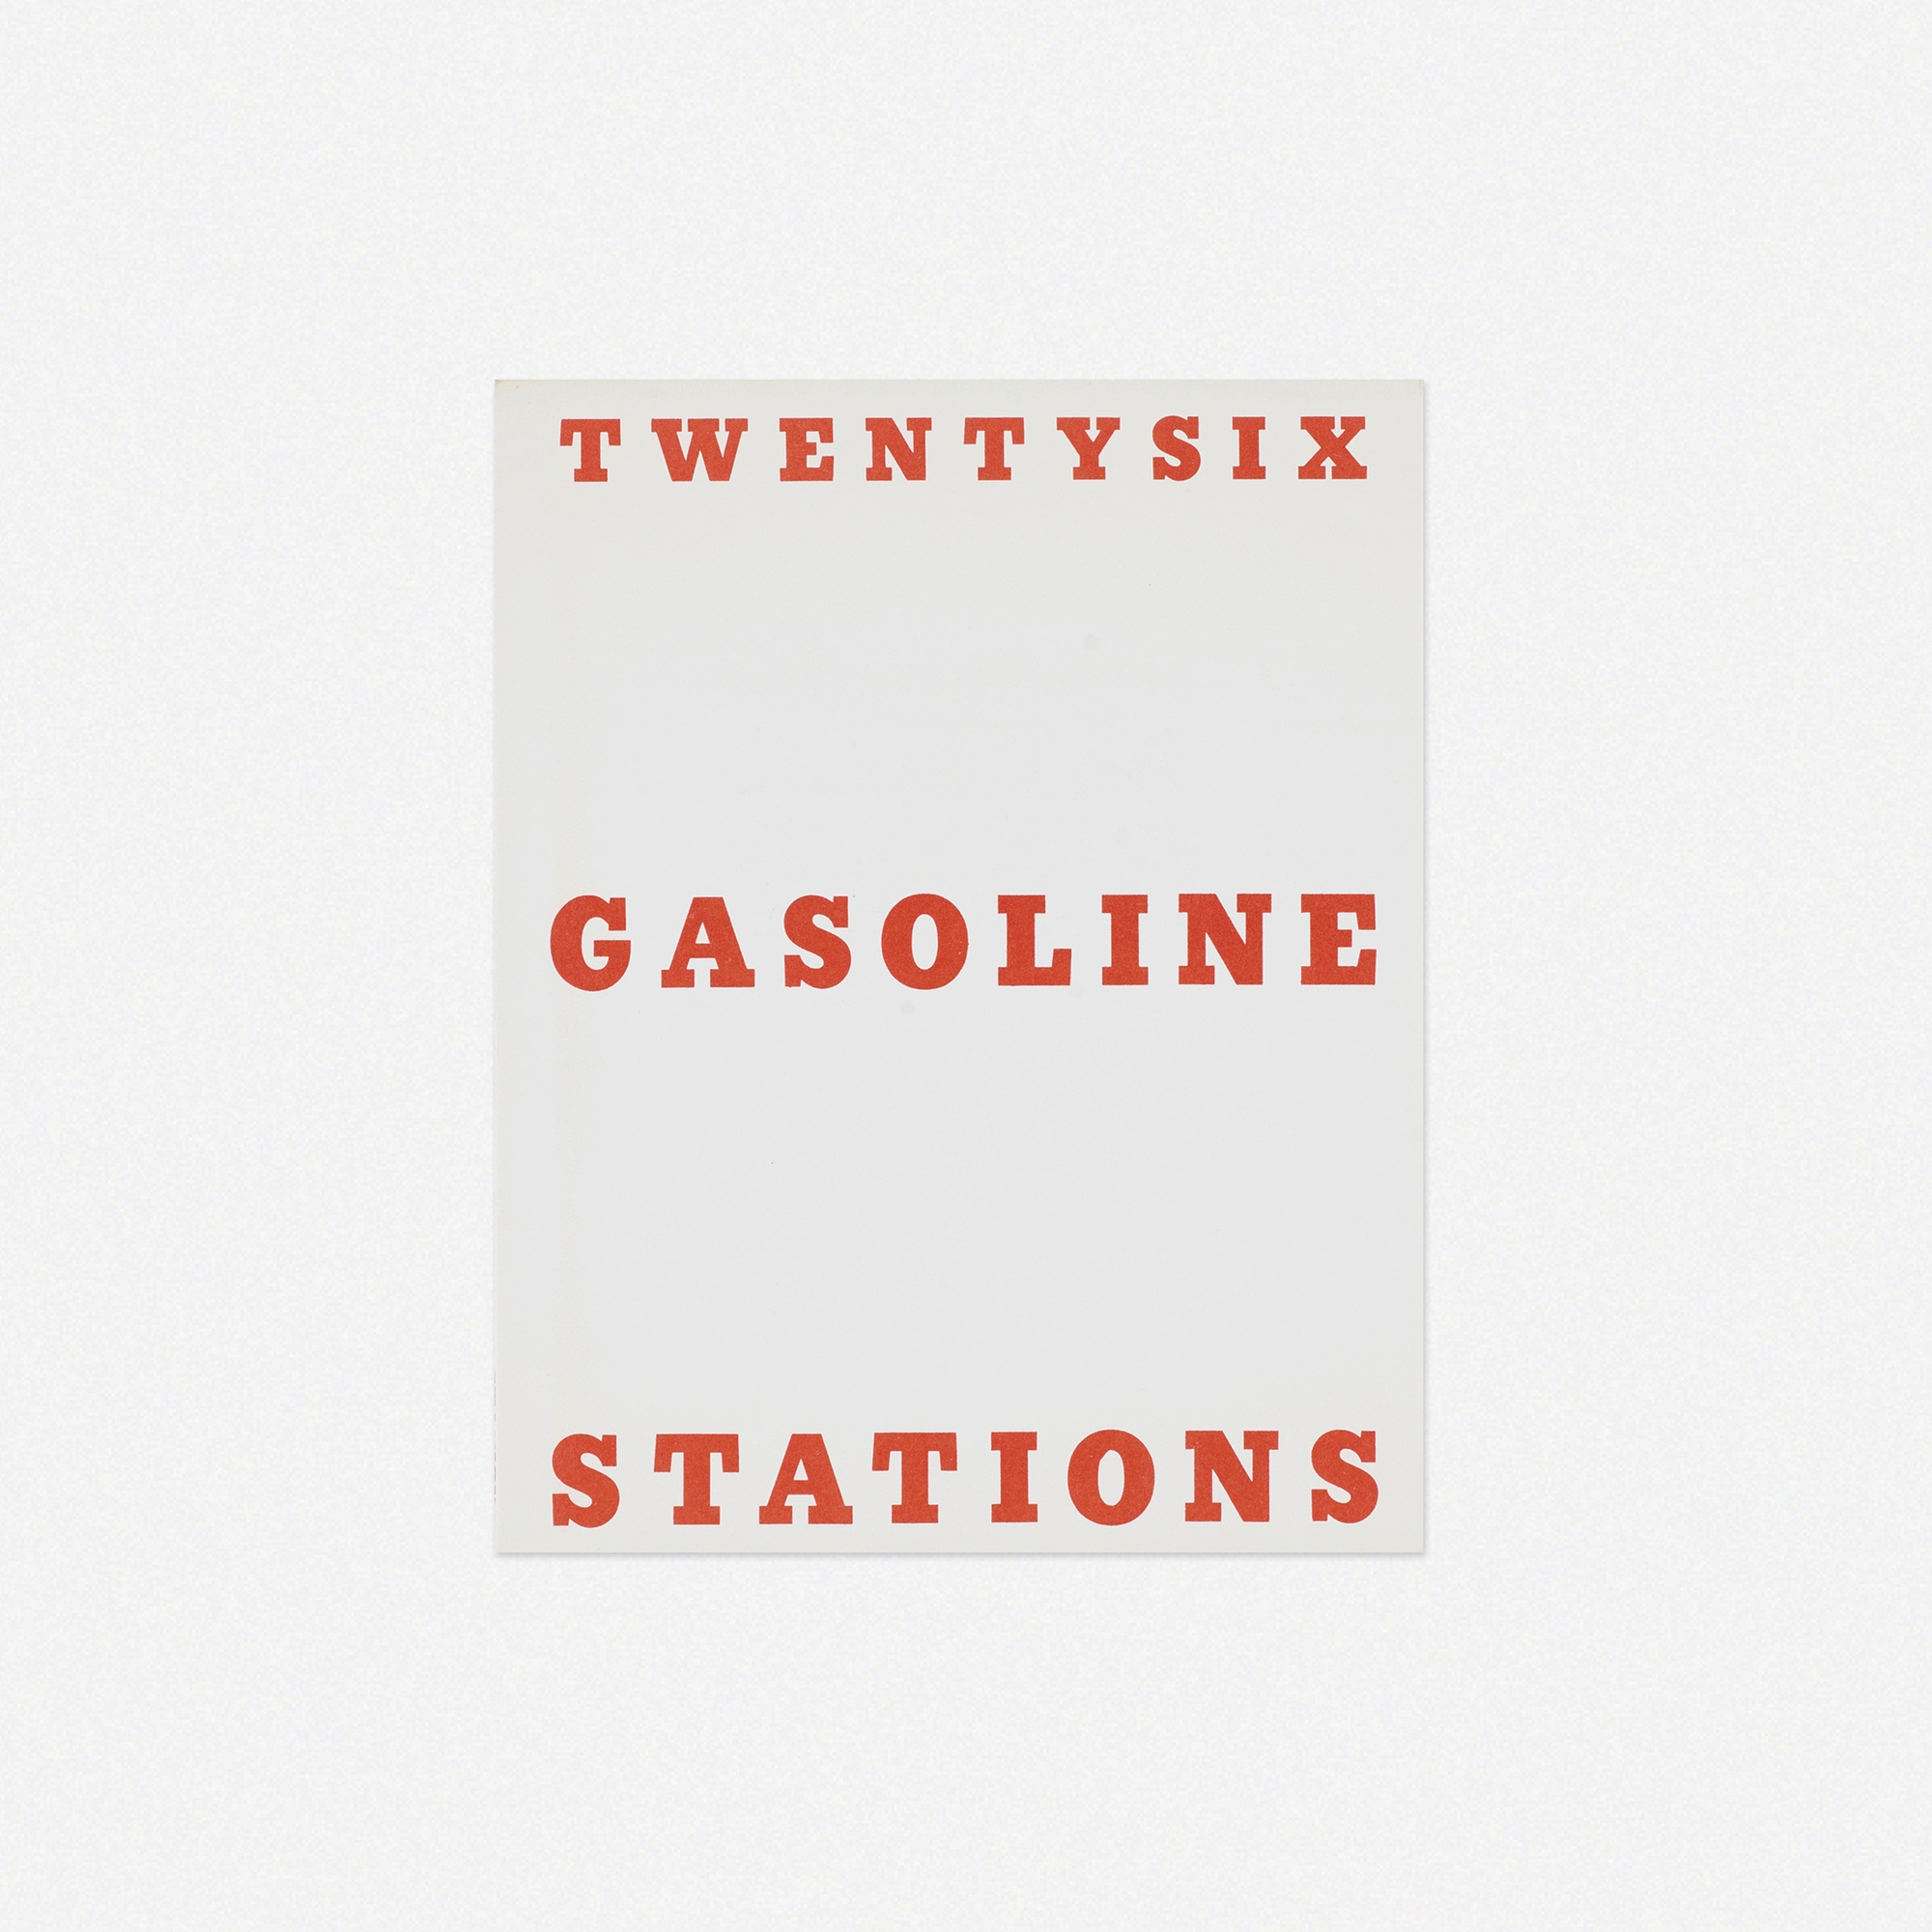 Twentysix Gasoline Stations by Ed Ruscha, 1963-1967